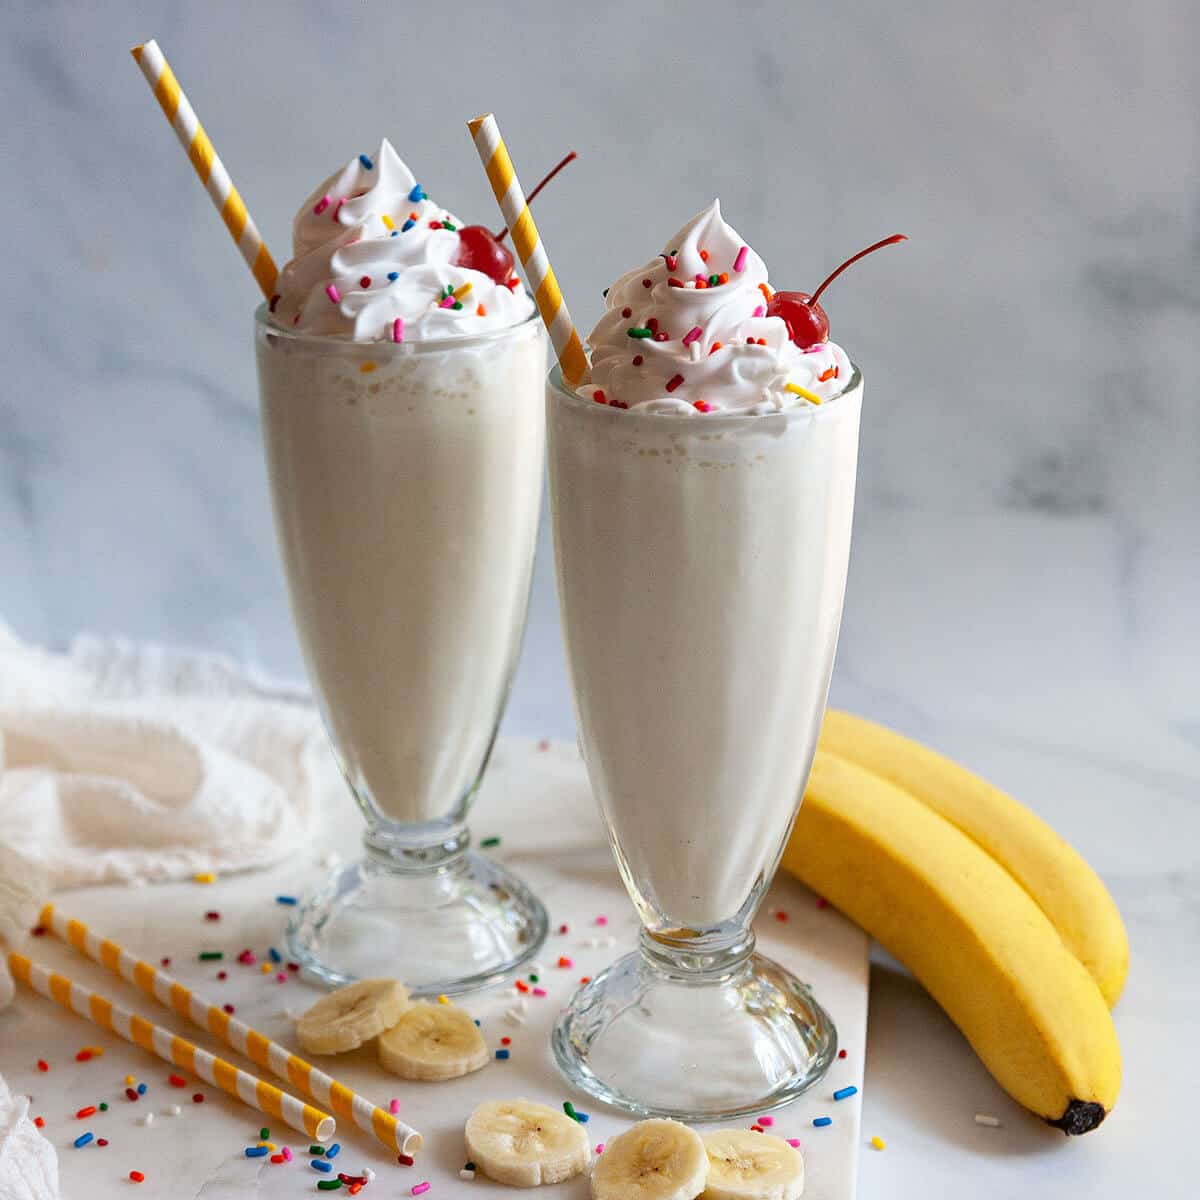 https://foodtasia.com/wp-content/uploads/2021/07/banana-milkshake-34.jpg